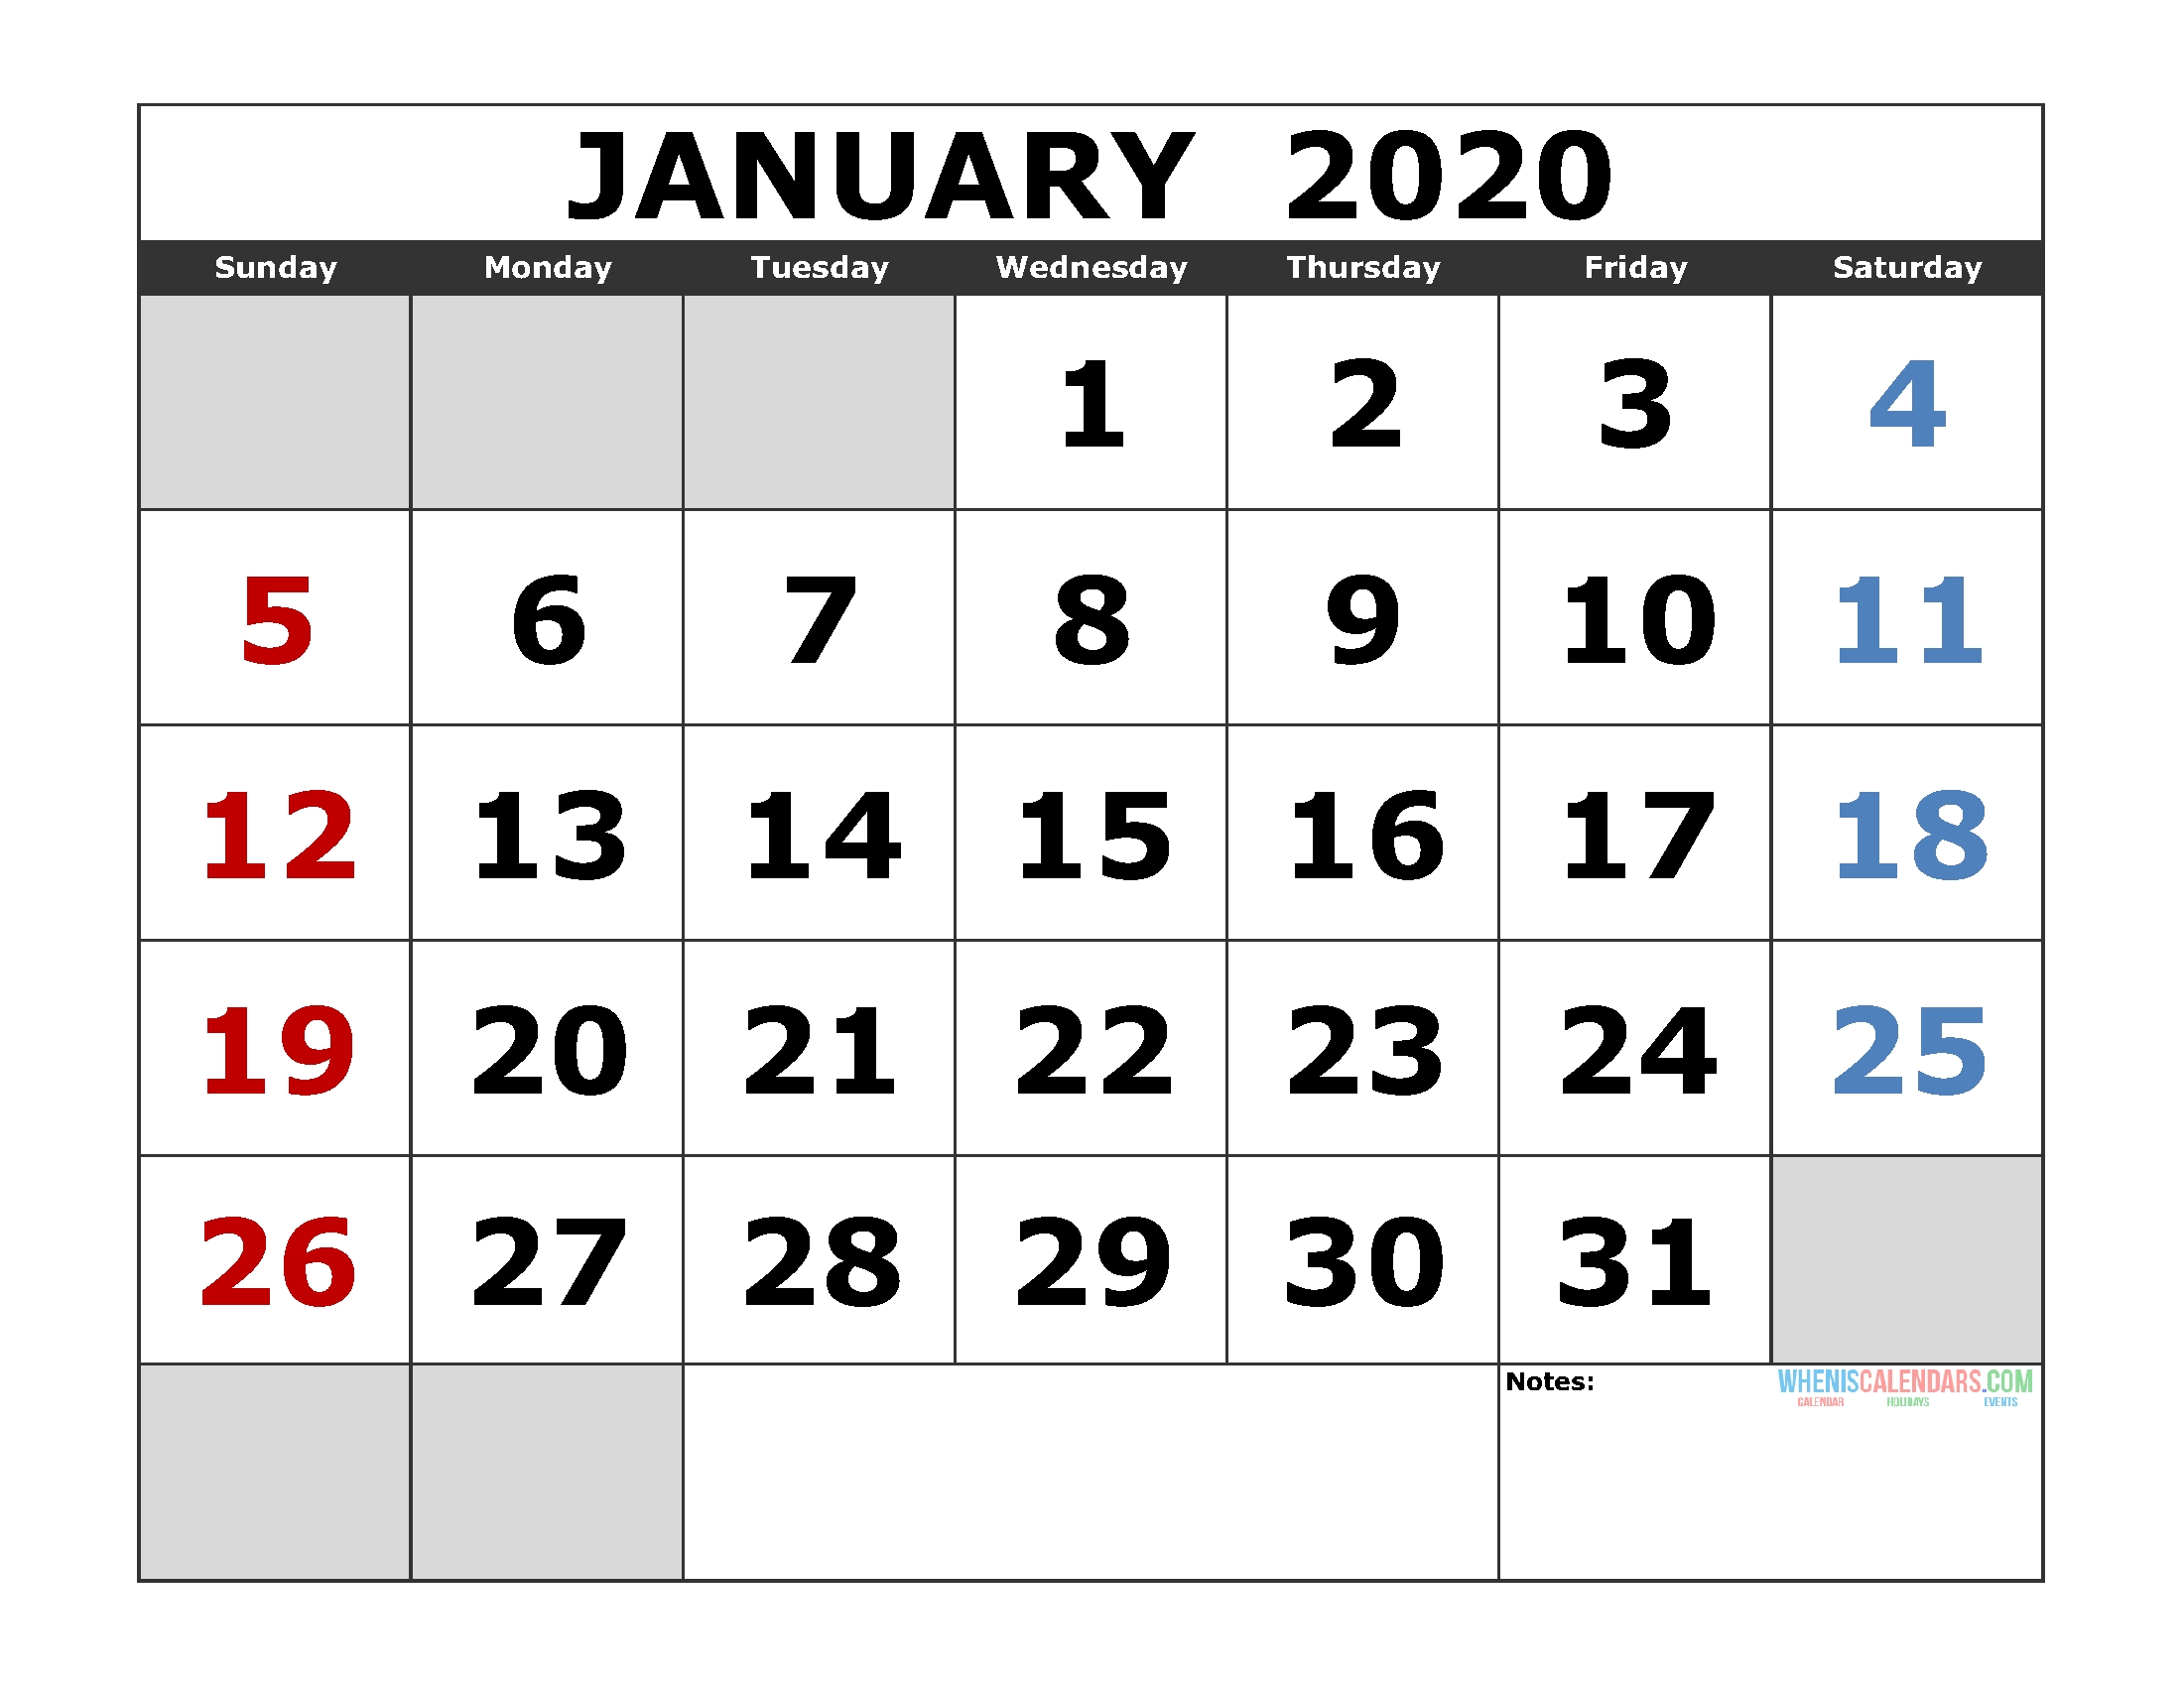 January 2020 Printable Calendar Template Excel, Pdf, Image-2020 Four Month Calendar Template Customize